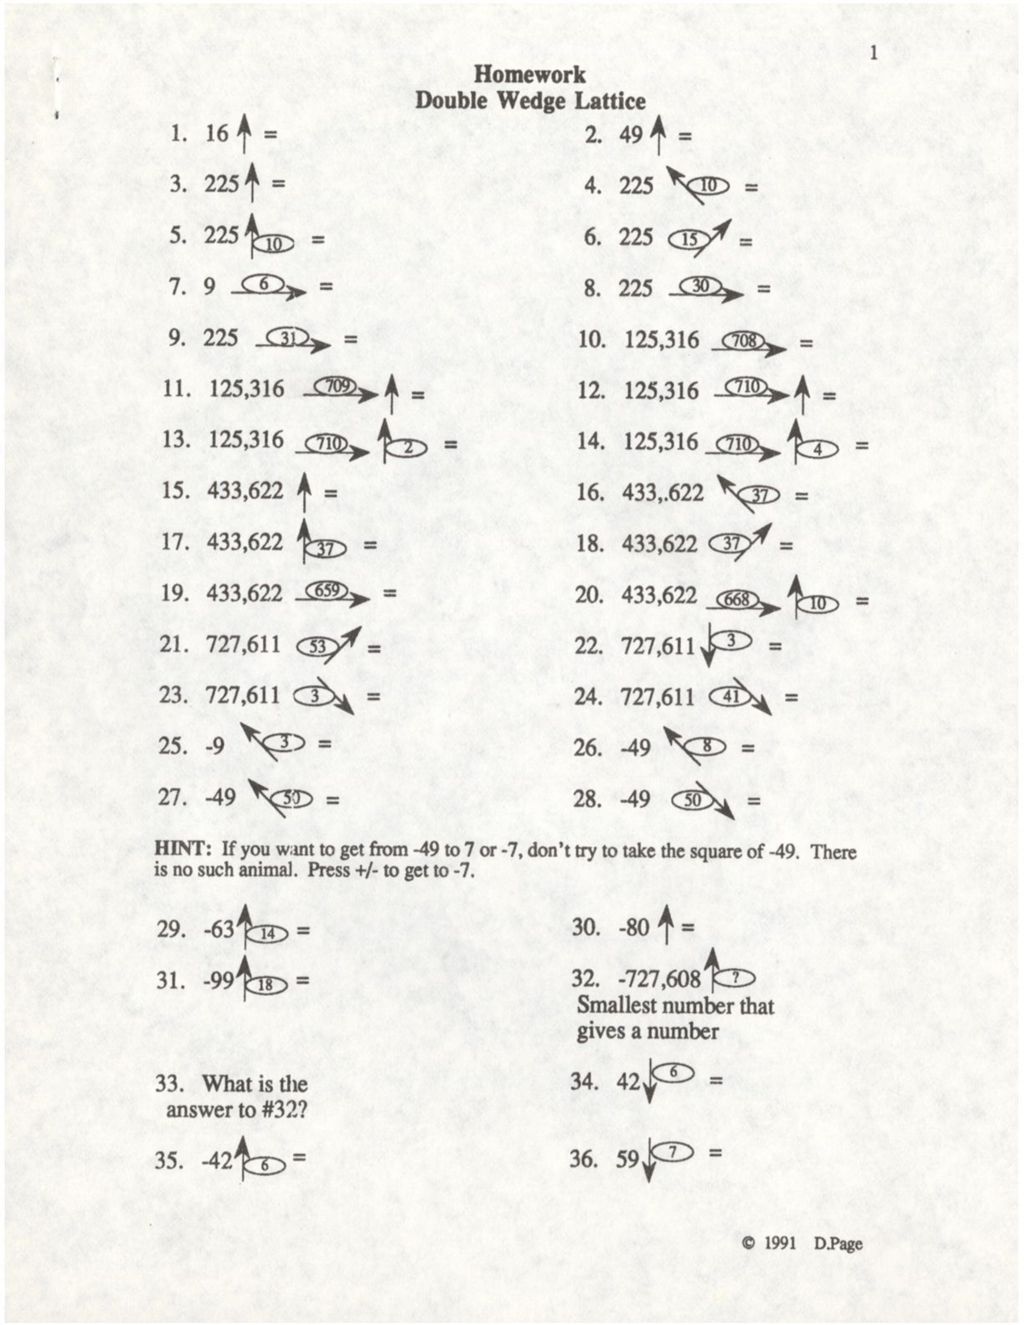 Miniature of Homework Double Wedge Lattice w/ Answer Key (1991)